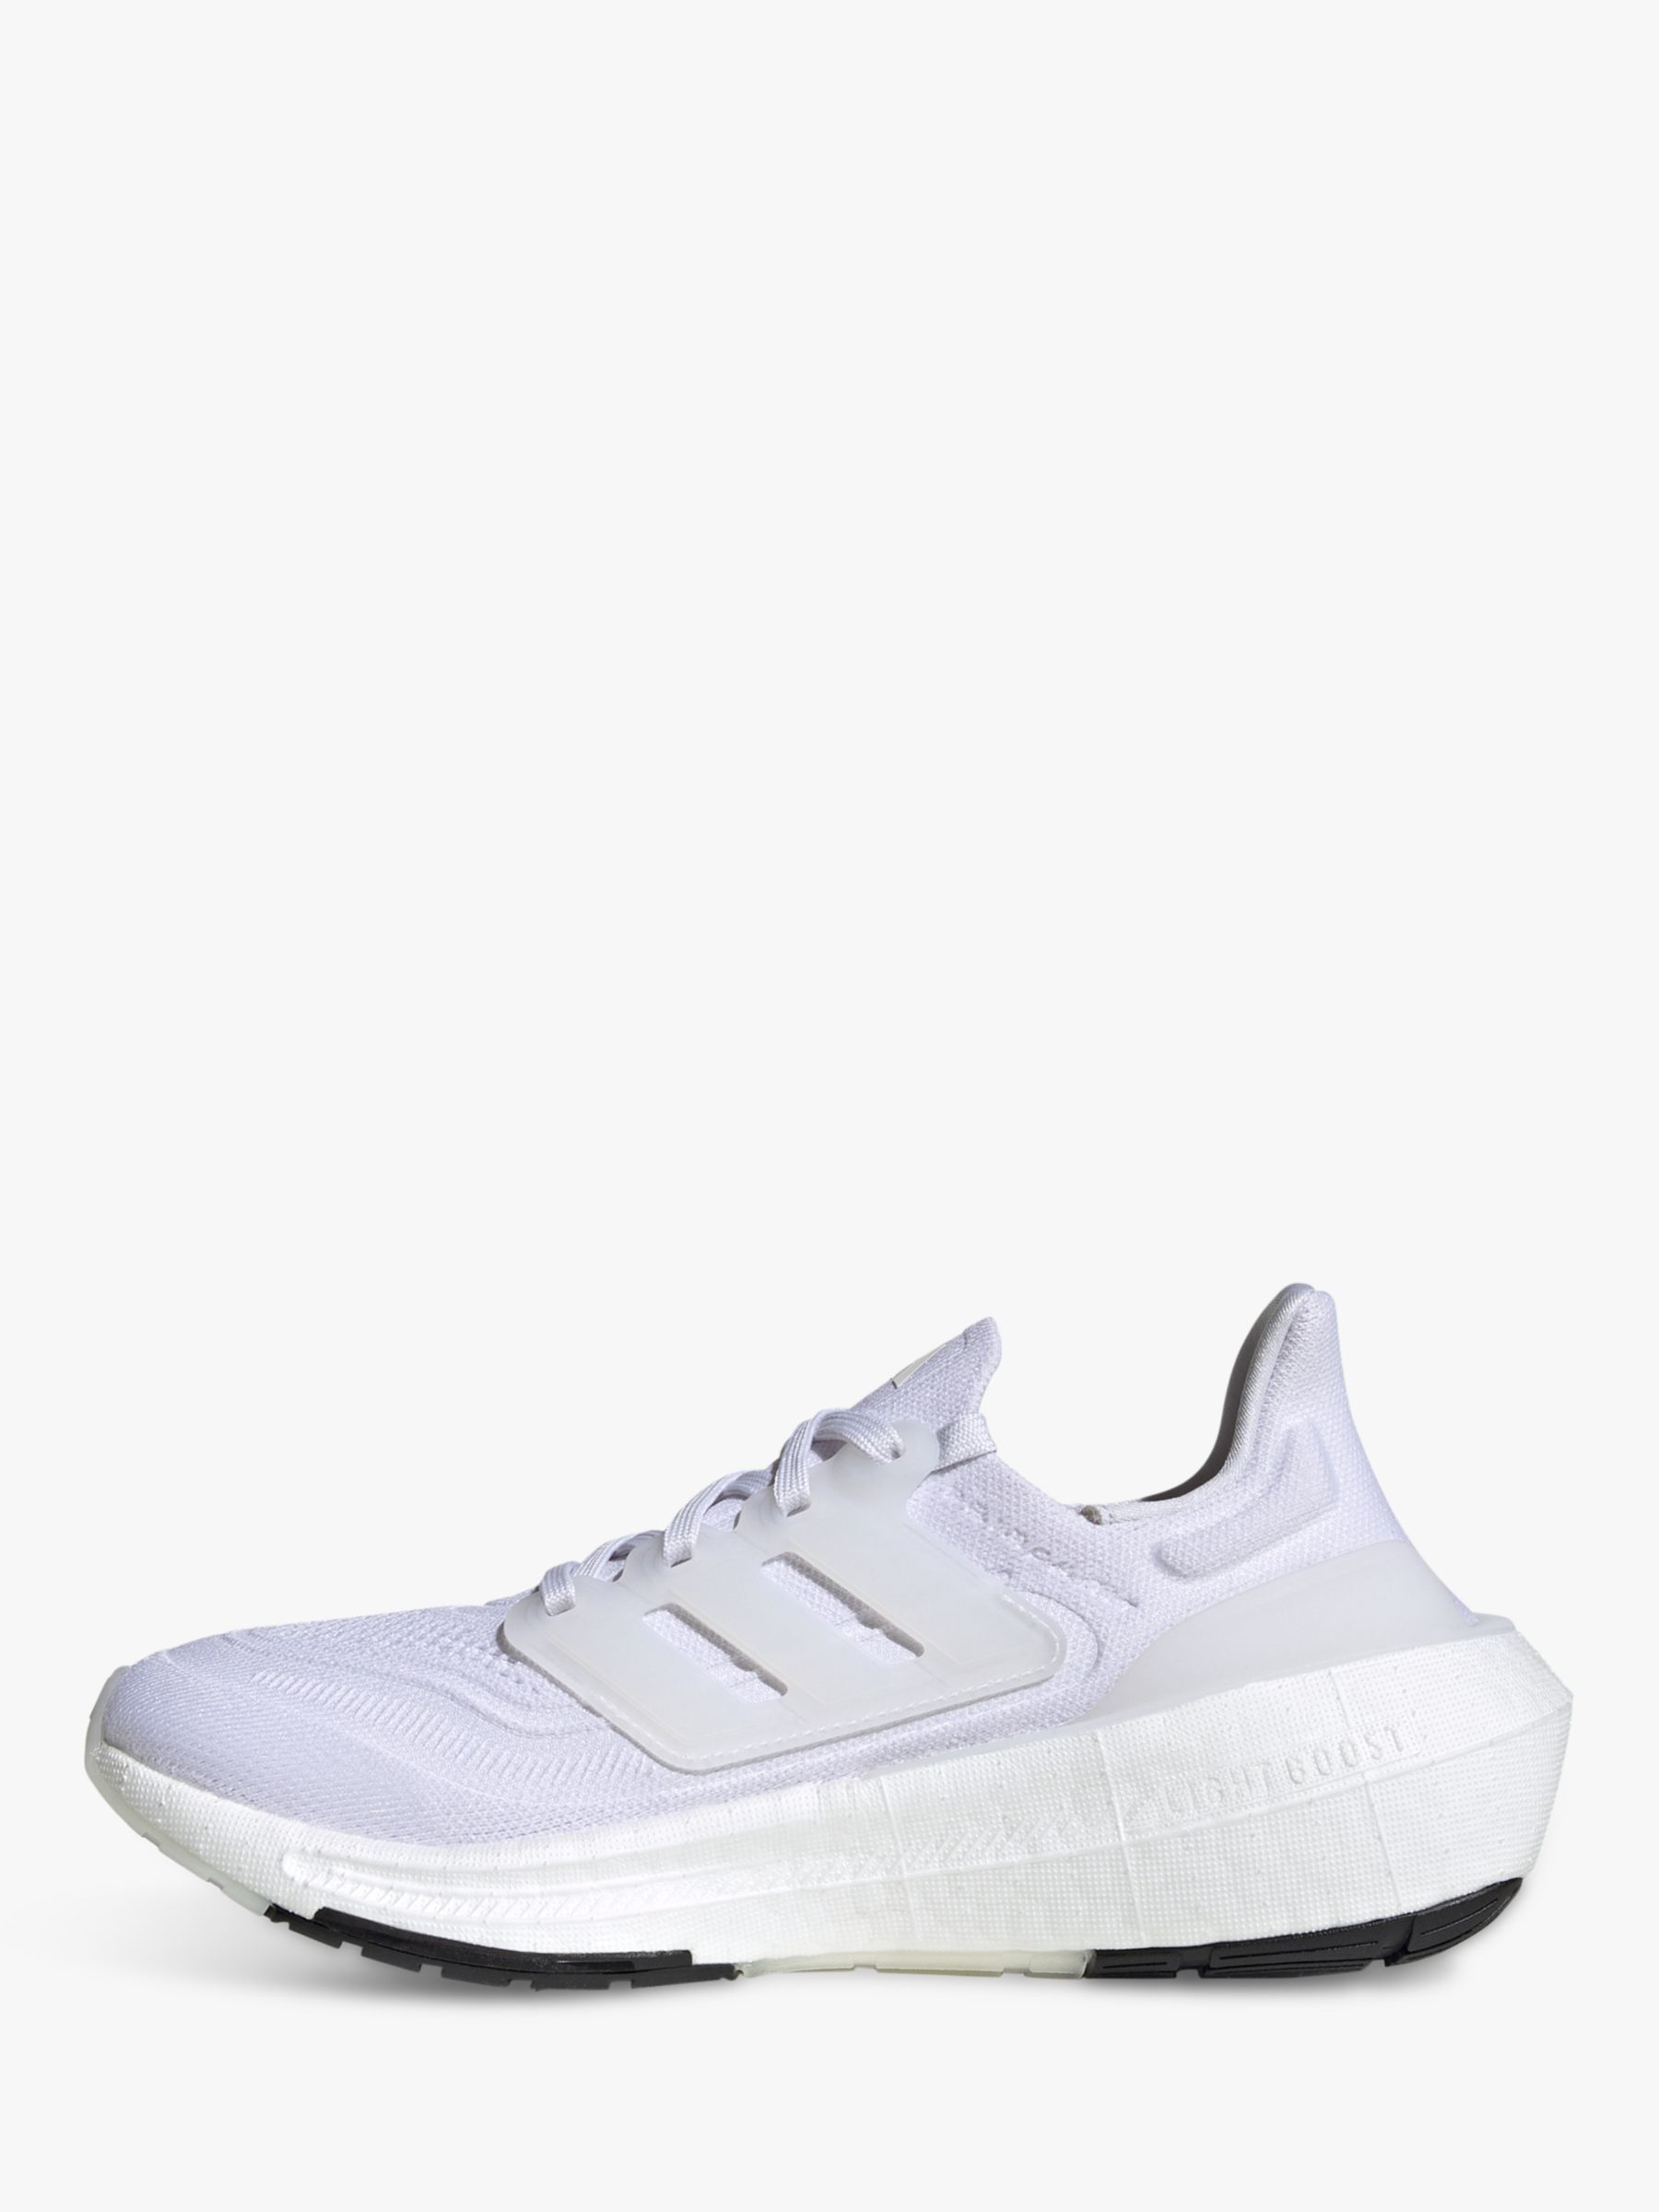 adidas Ultraboost Light Women's Running Shoes, Cloud White/Crystal ...